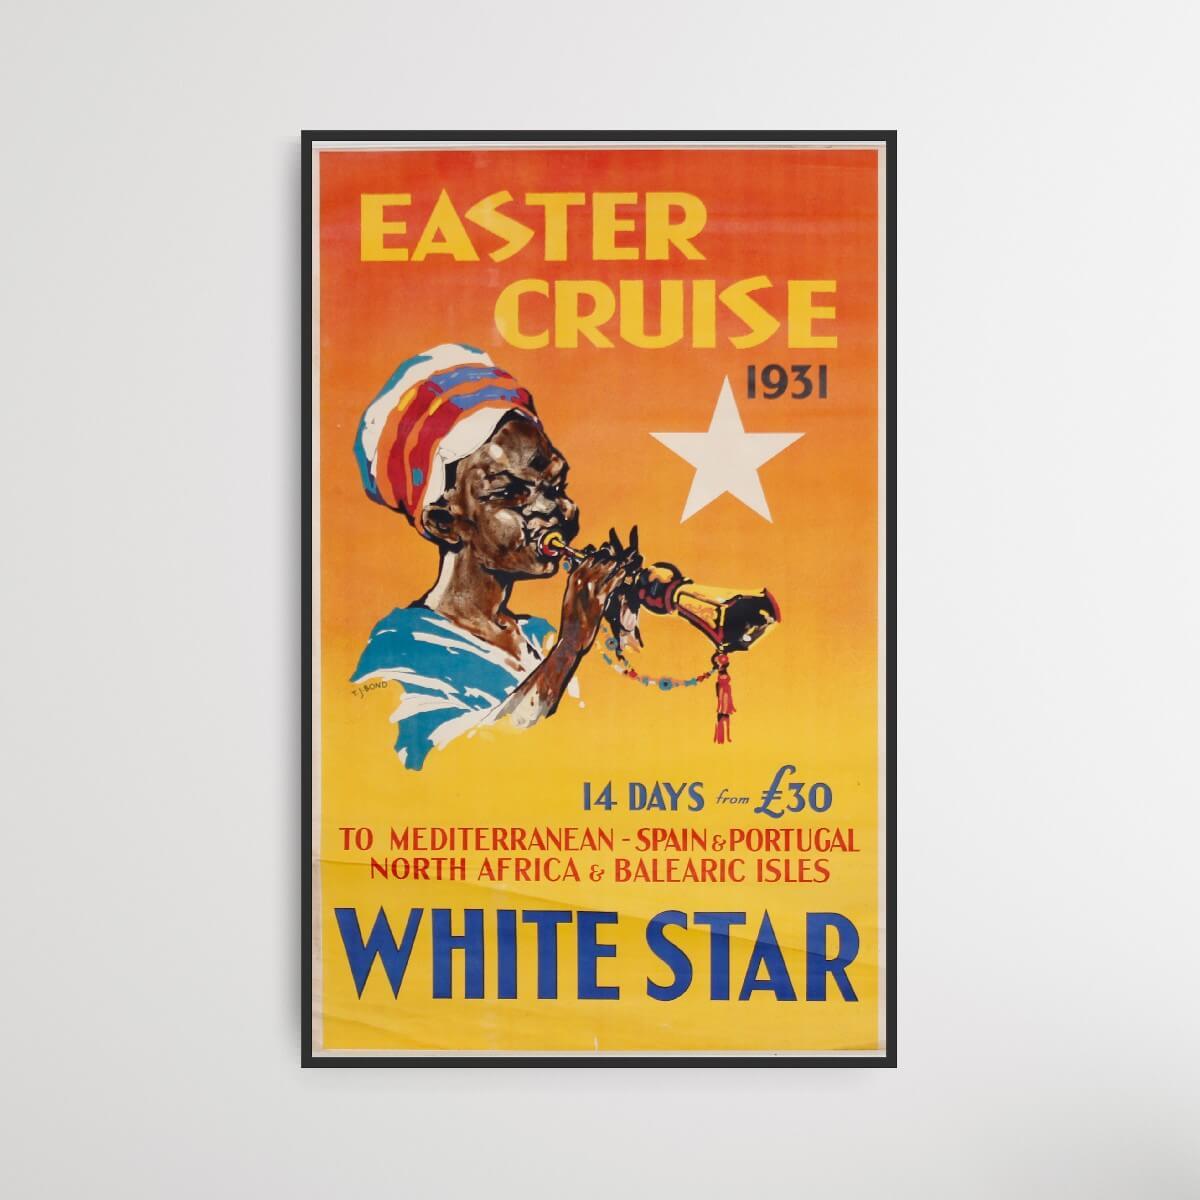 Easter Cruise - White Star